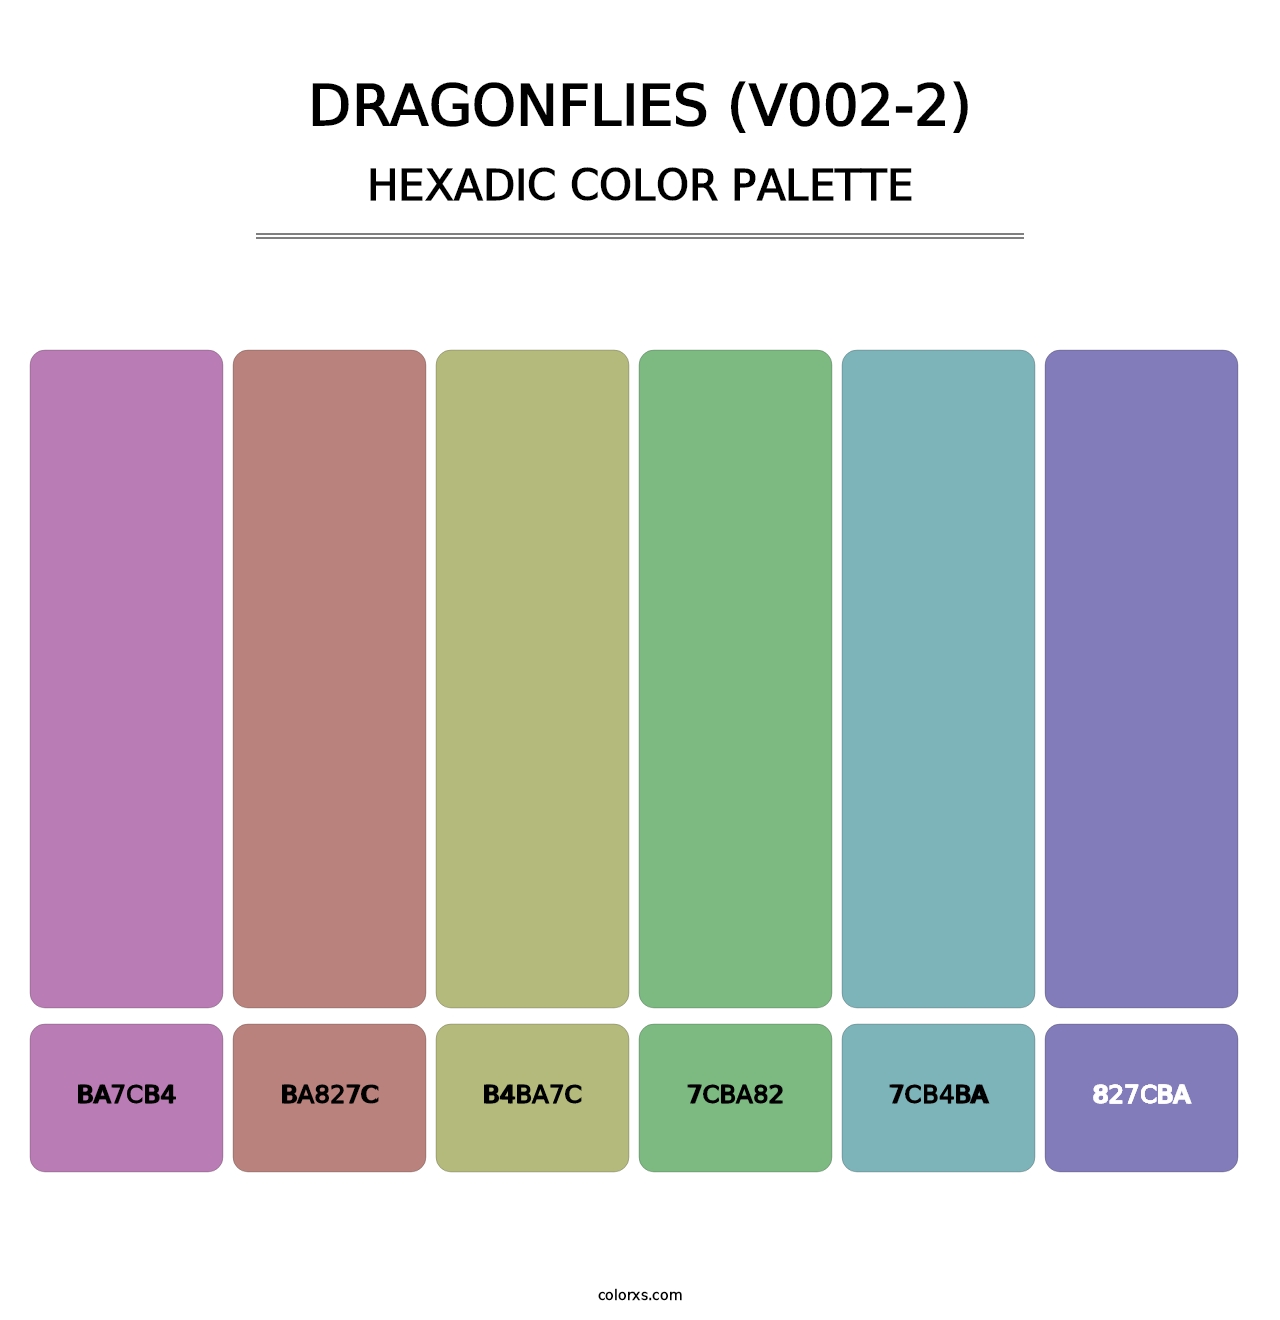 Dragonflies (V002-2) - Hexadic Color Palette